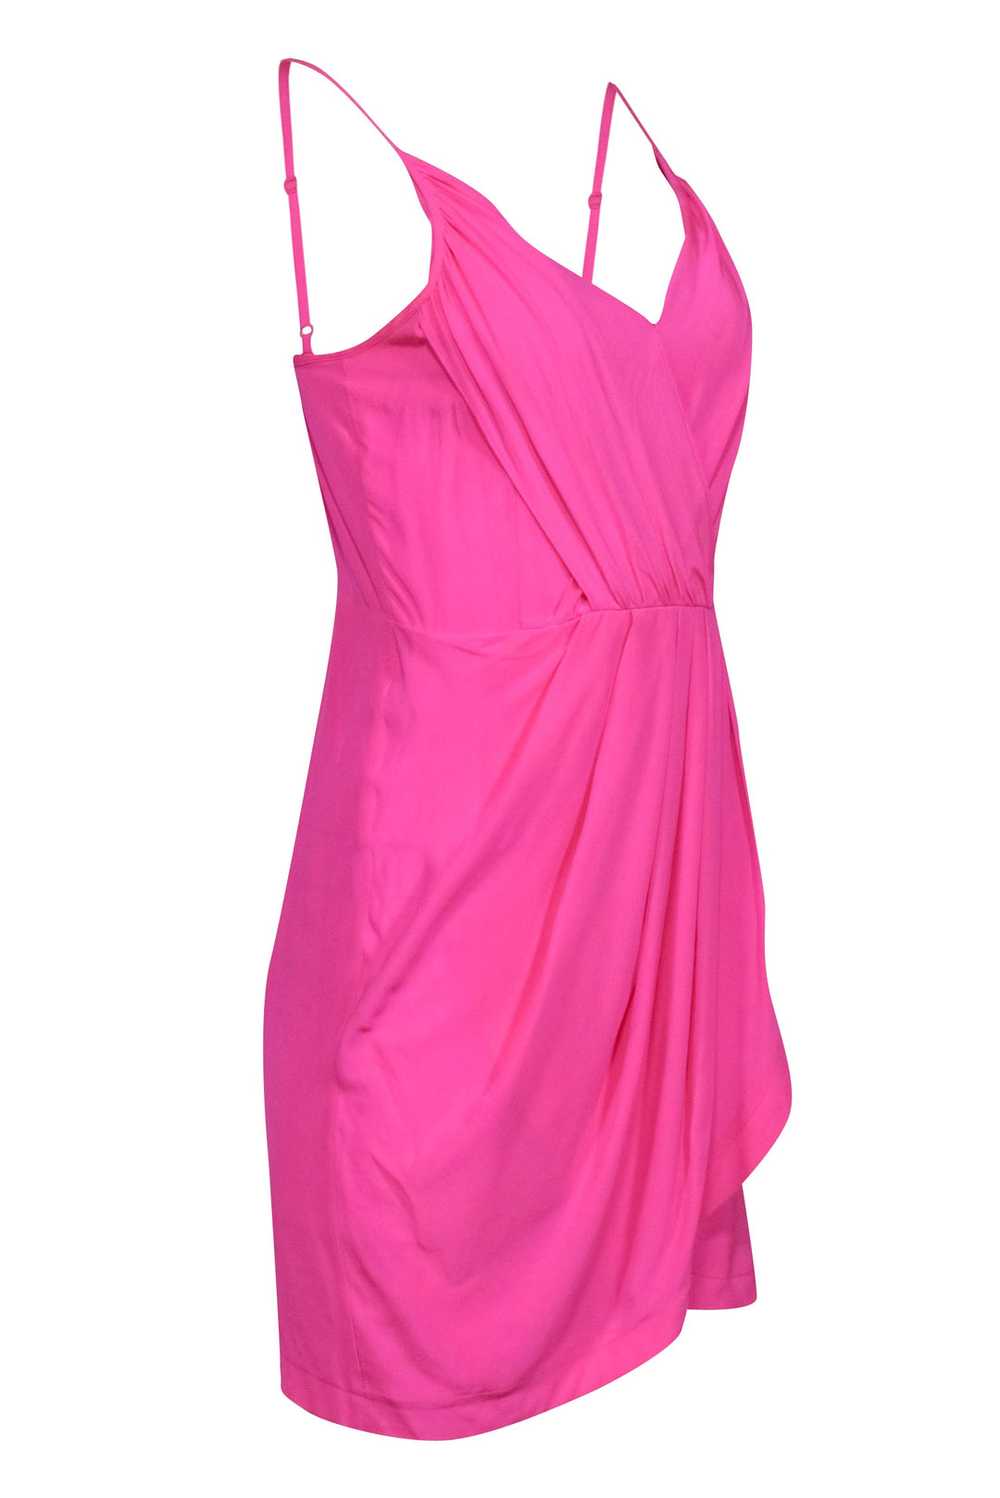 Yumi Kim - Hot Pink Sleeveless Mini Dress Sz S - image 2